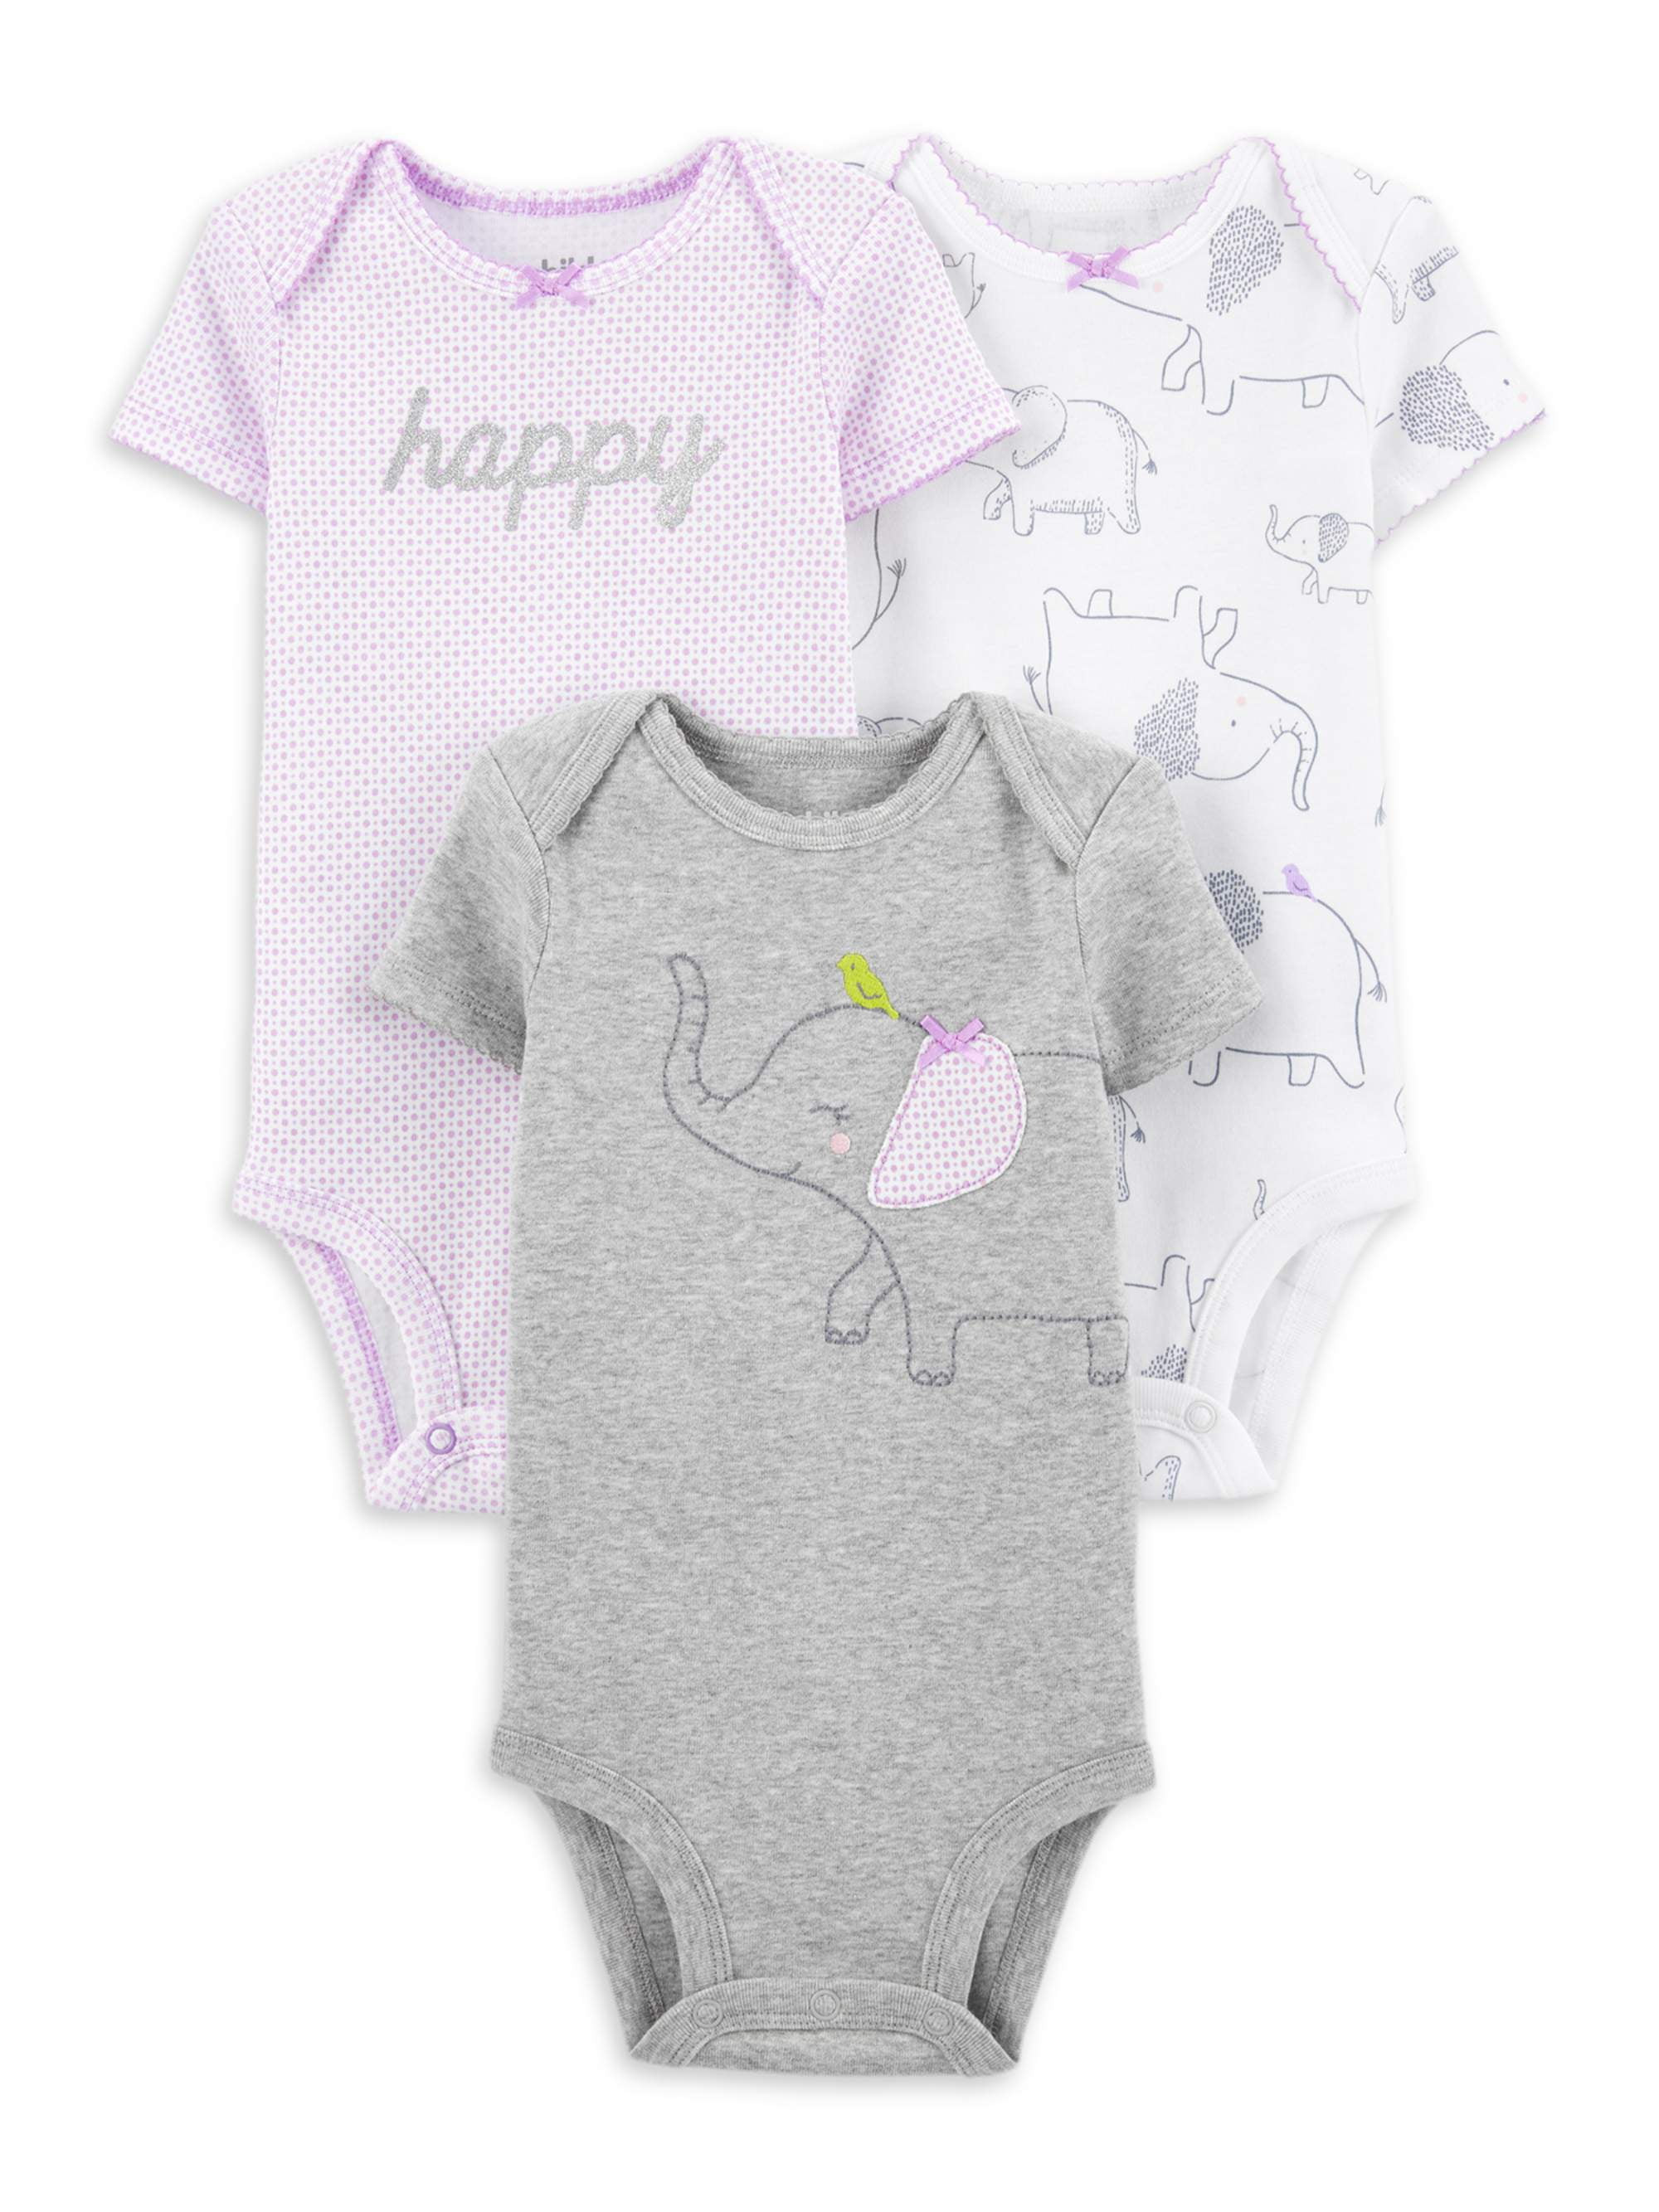 Great Horned Owl Baby Toddler Infant Short Sleeve Cotton Bodysuit Black, Pink Gray